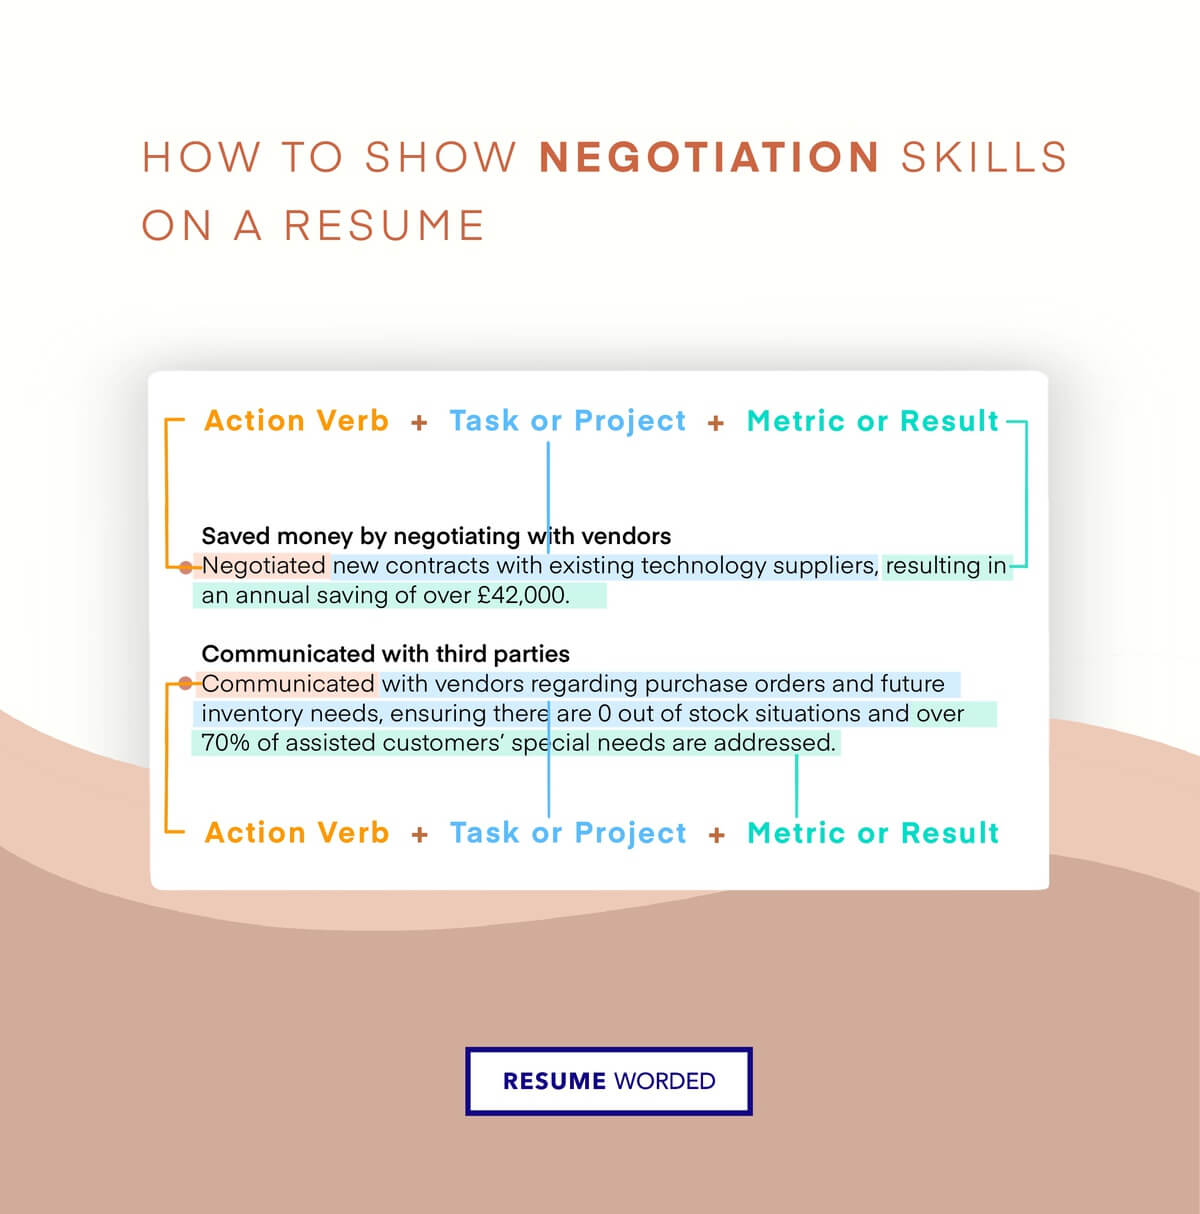 Showcase negotiation and crisis management skills - Senior Program Manager CV